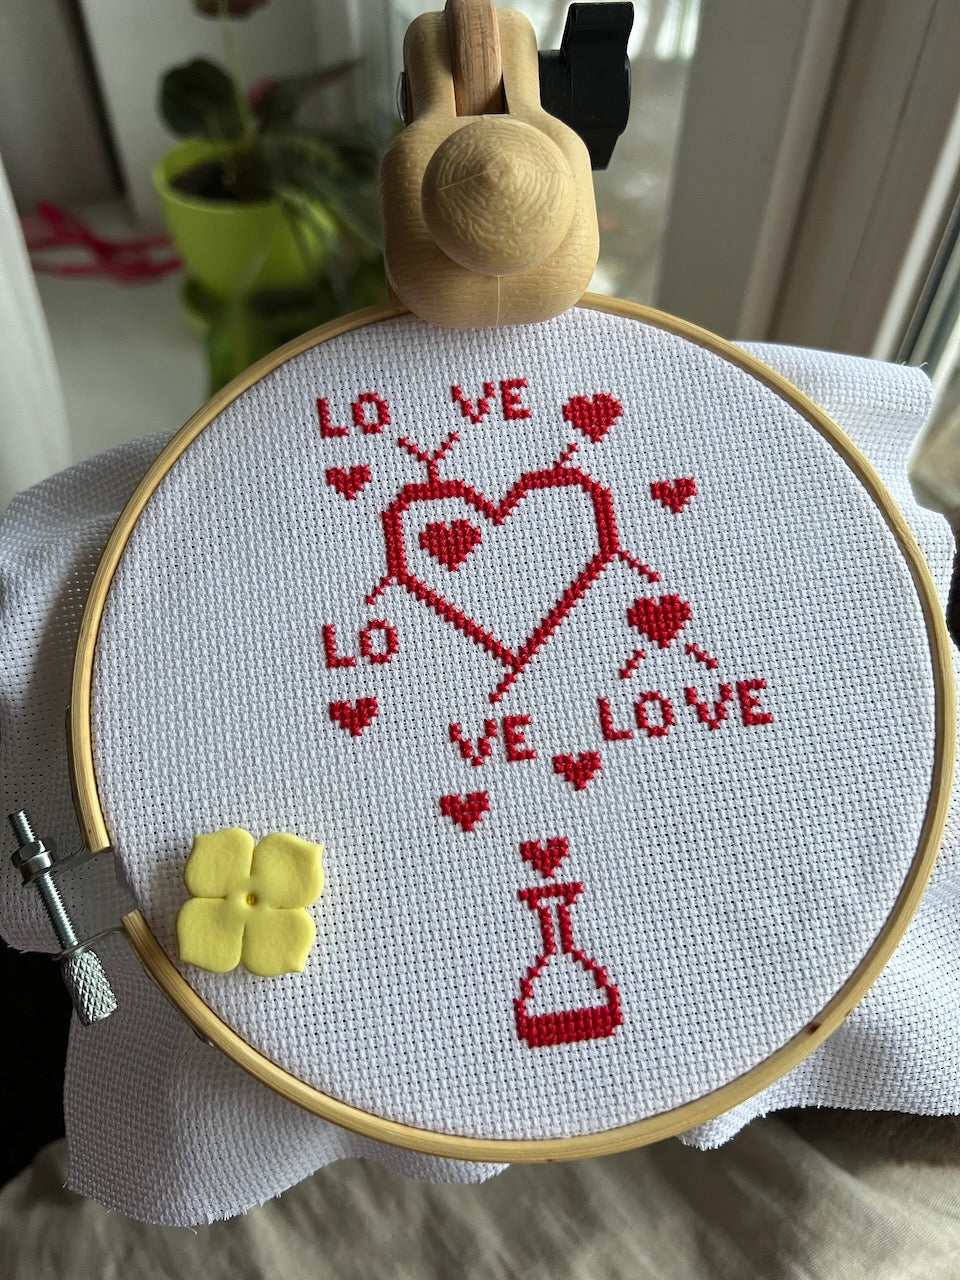 red heart cross stitch pattern